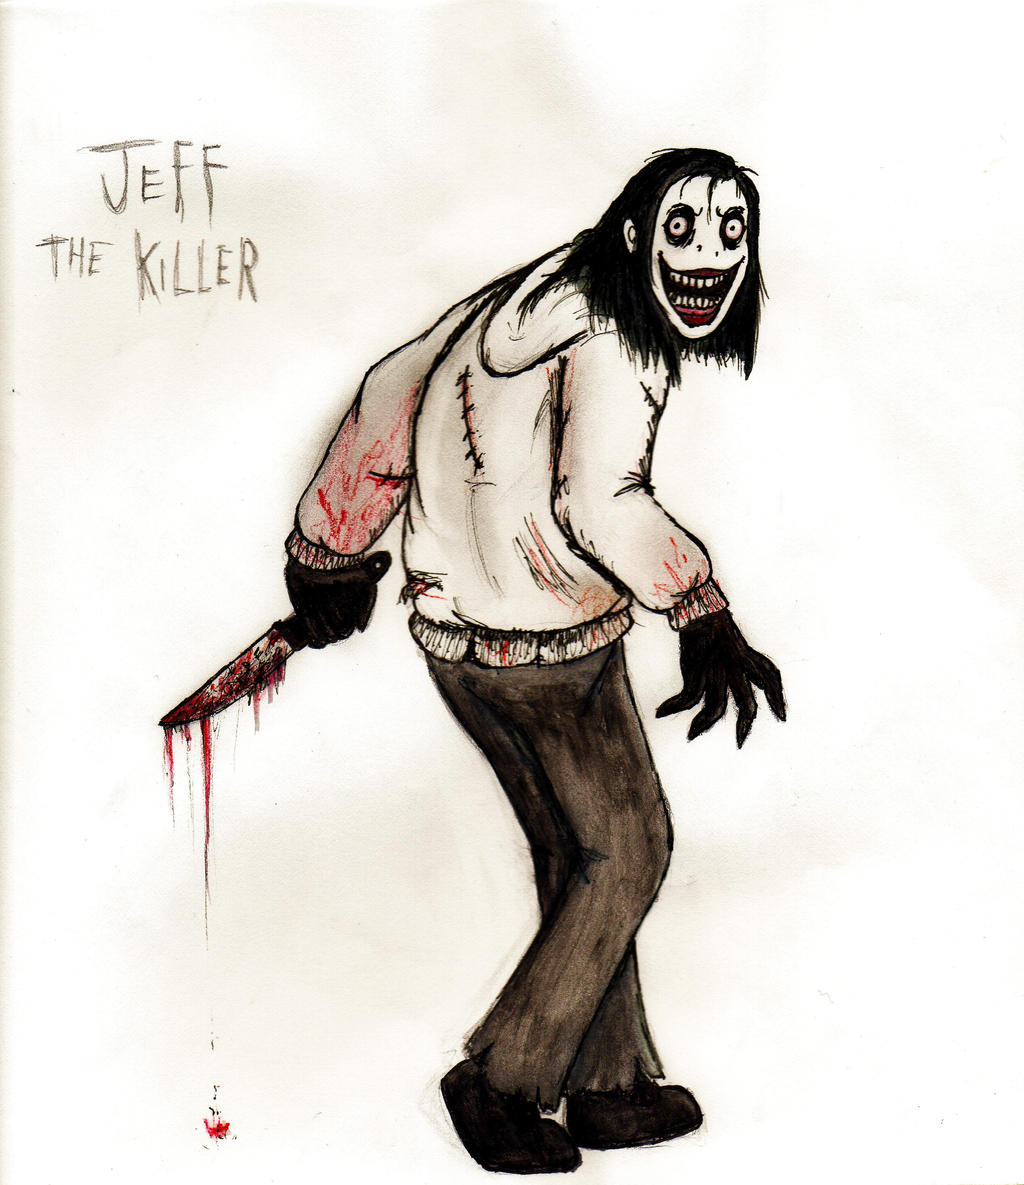 Jeff The Killer by Tsnophaljakarax on Newgrounds